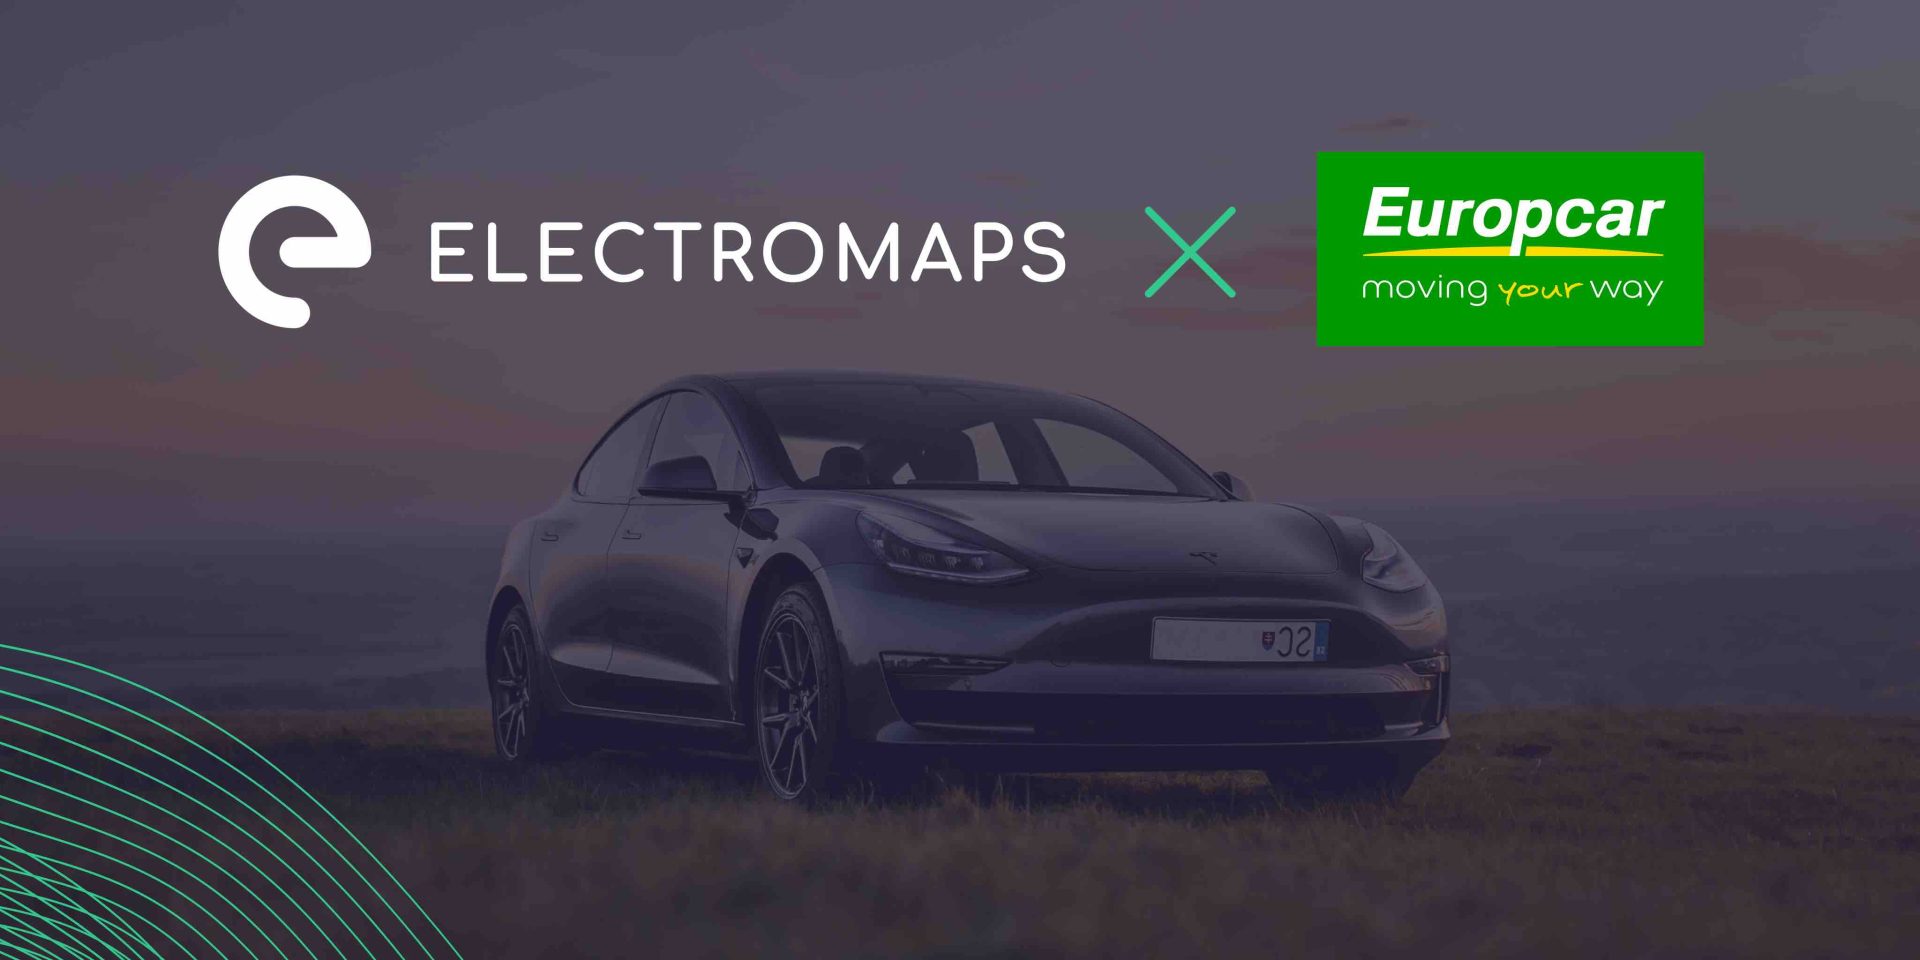 Electromaps Europcar Verano 2022